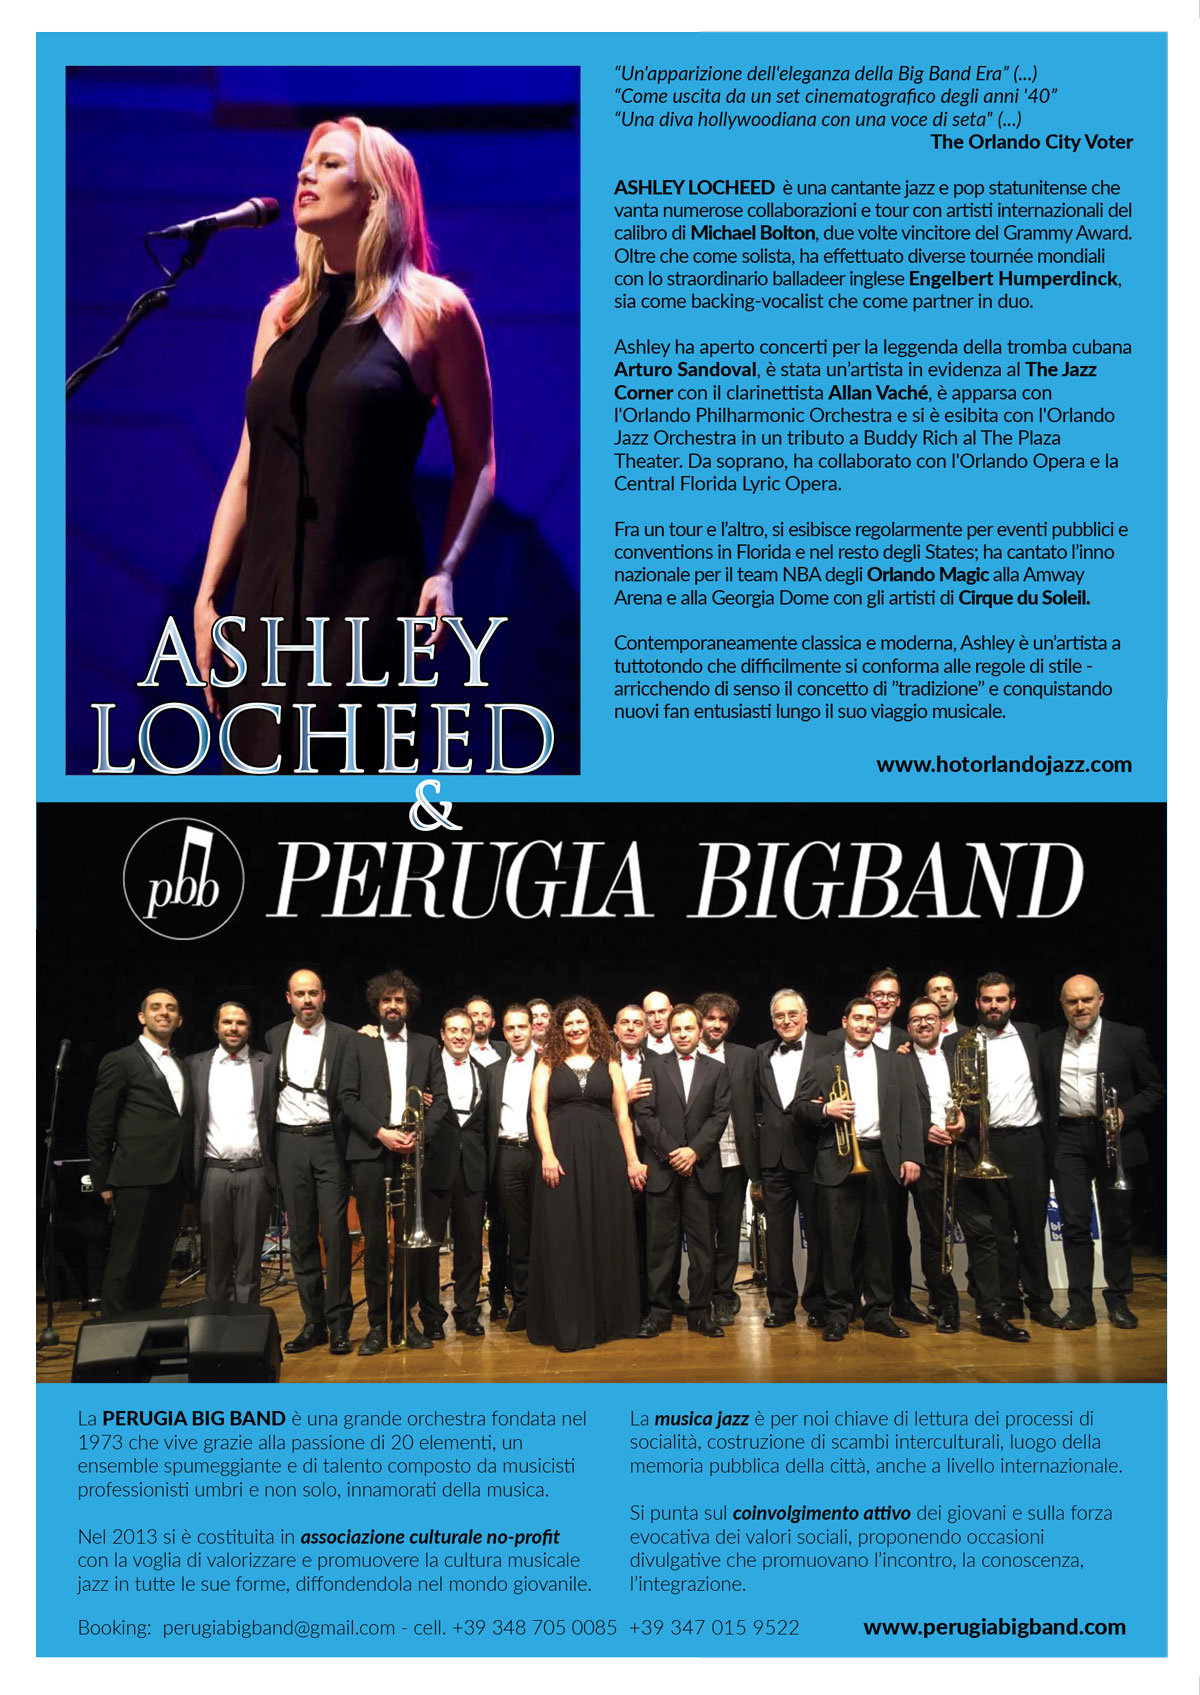 ASHLEY LOCHEED Perugia-Big Band Promo-MARSCIANO-A5-PRINT